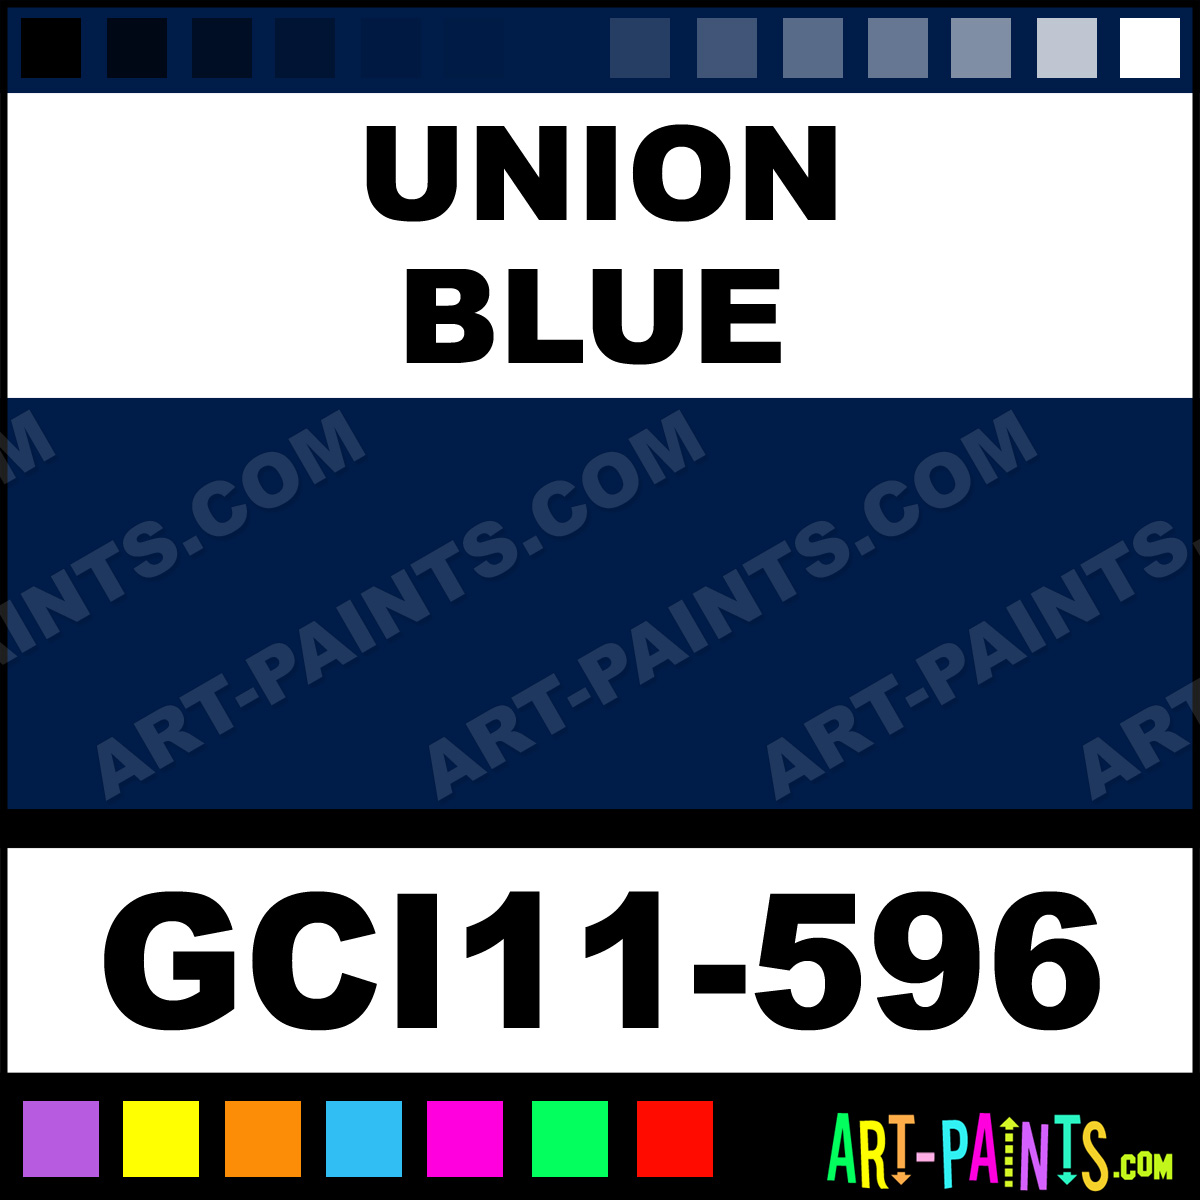 Union-Blue-lg.jpg